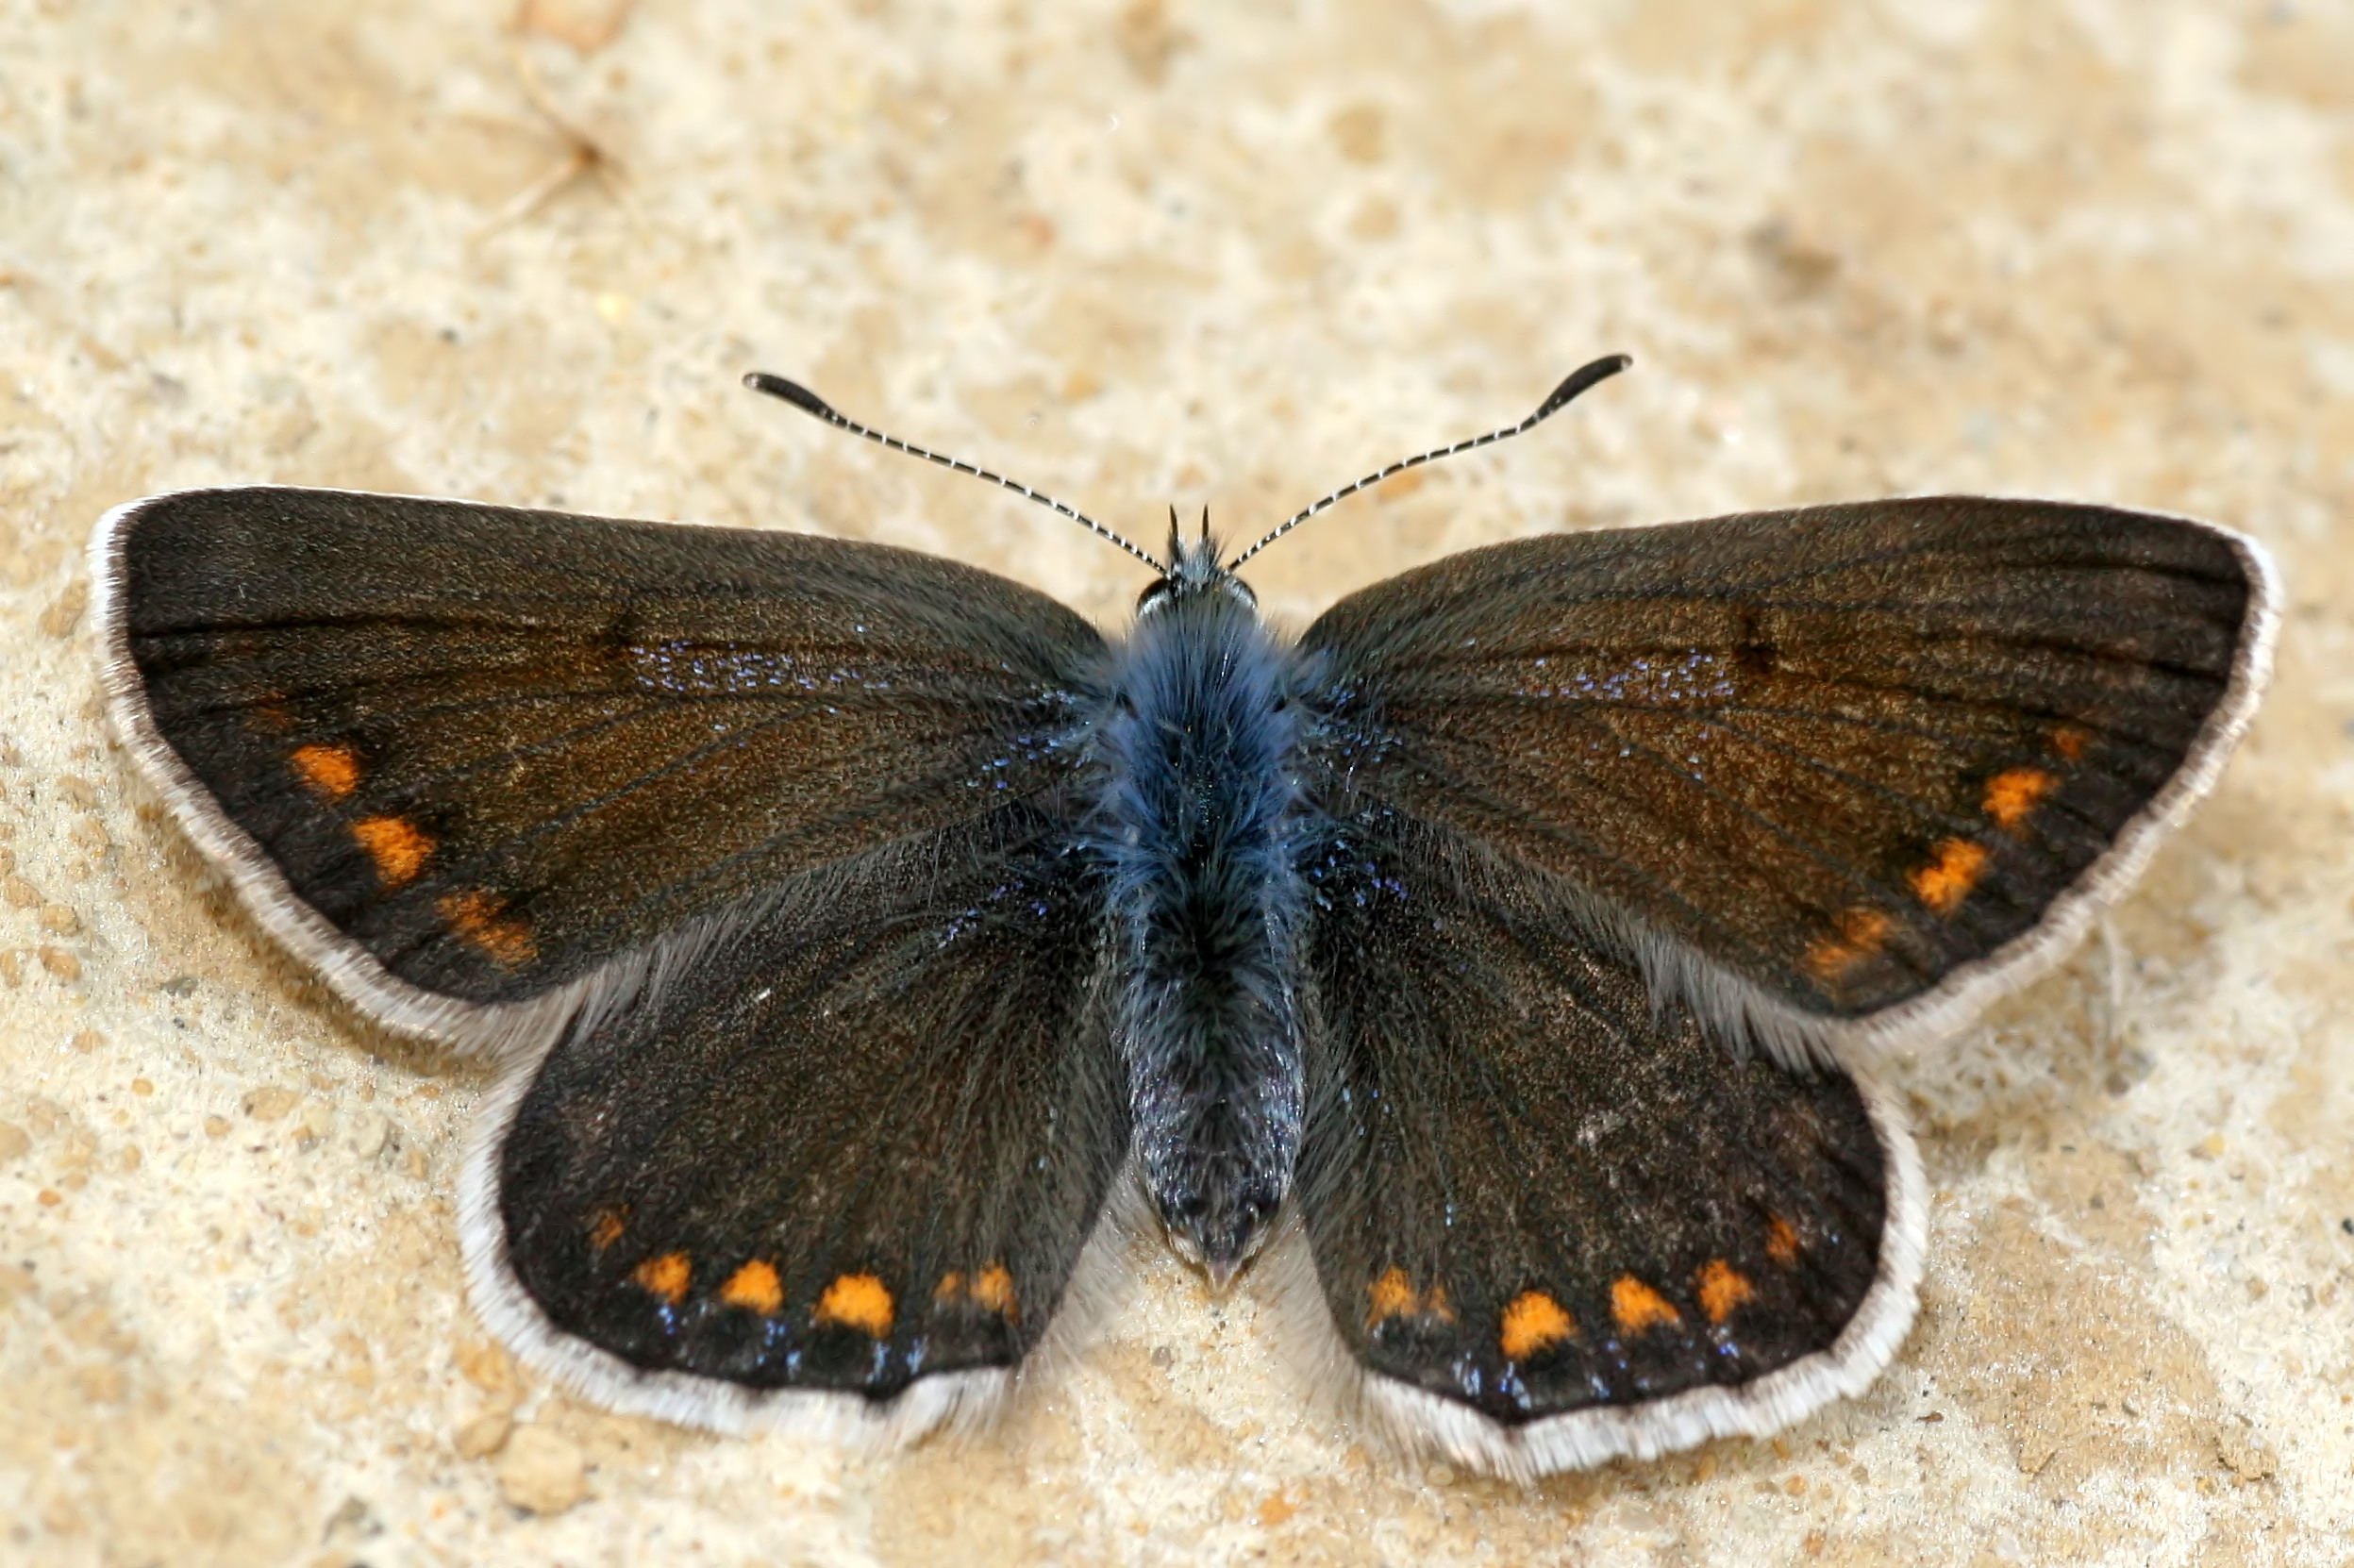 Modraszek ikar (Polyommatus icarus), samica